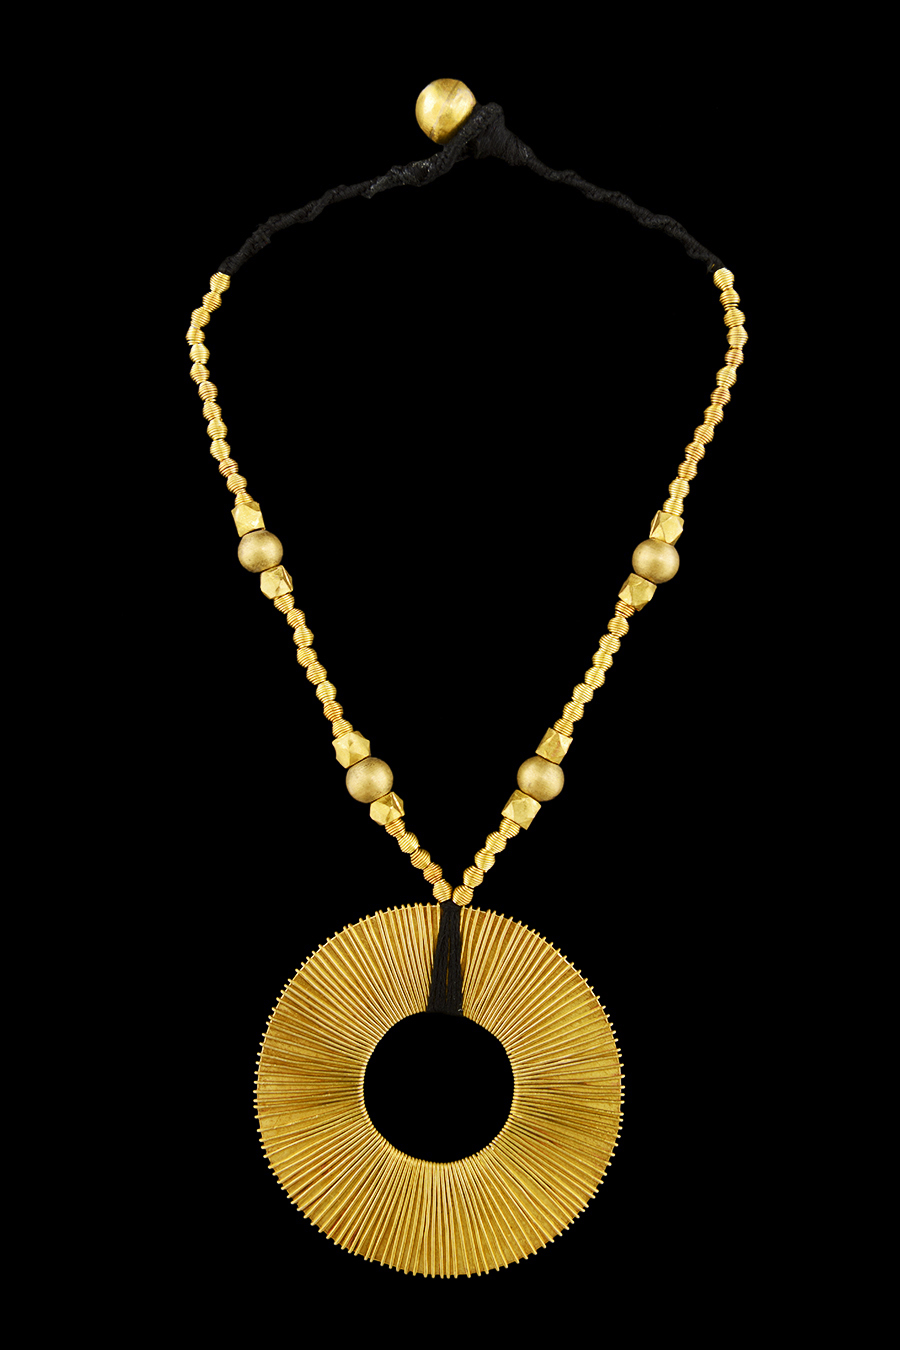 Tribal Necklace - Large Round Pendant